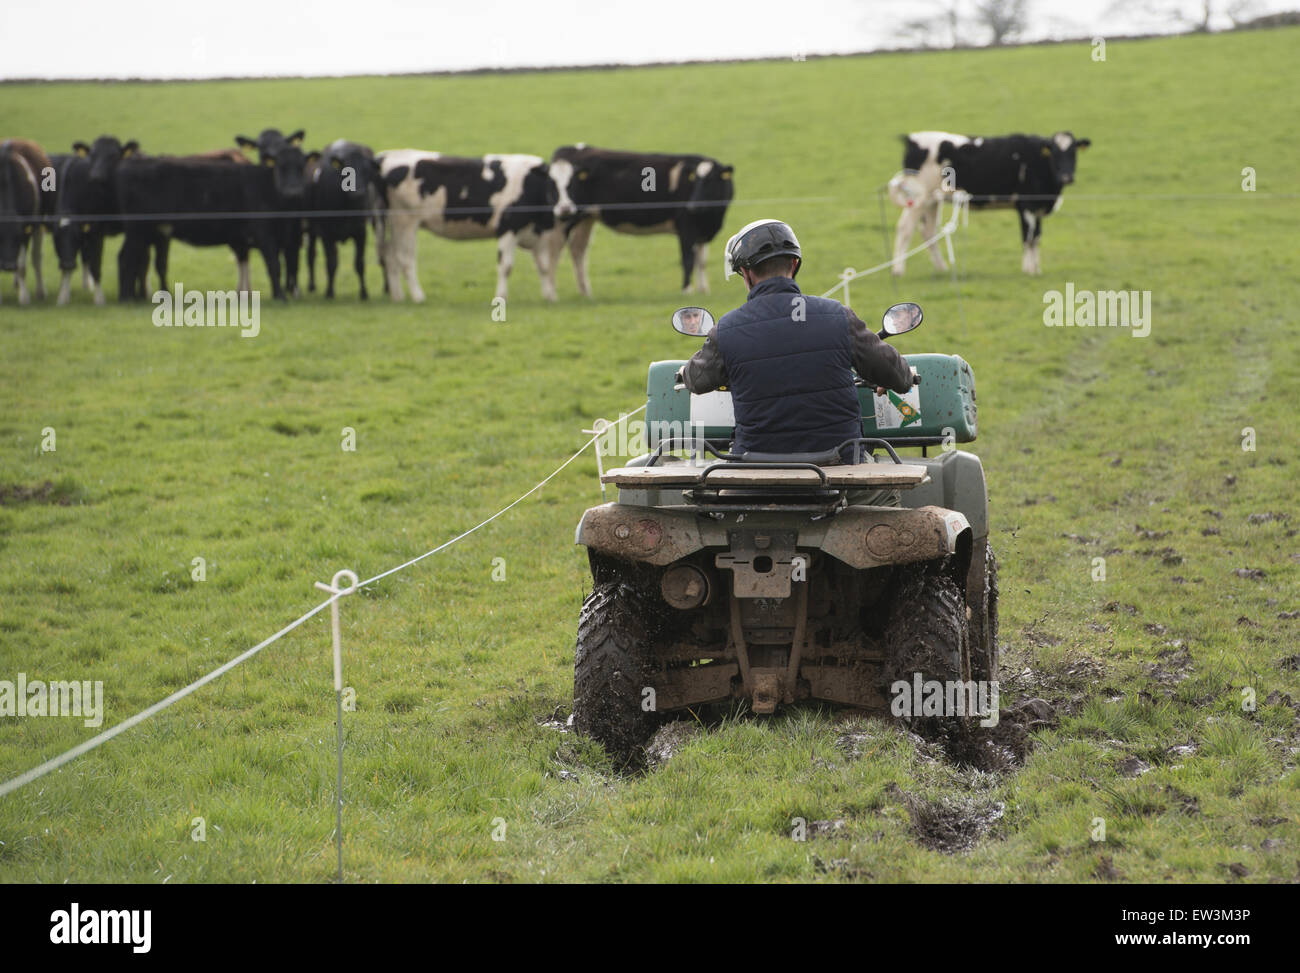 Dairy farming, herdsman riding quadbike through pasture towards cattle herd, Cumbria, England, April Stock Photo